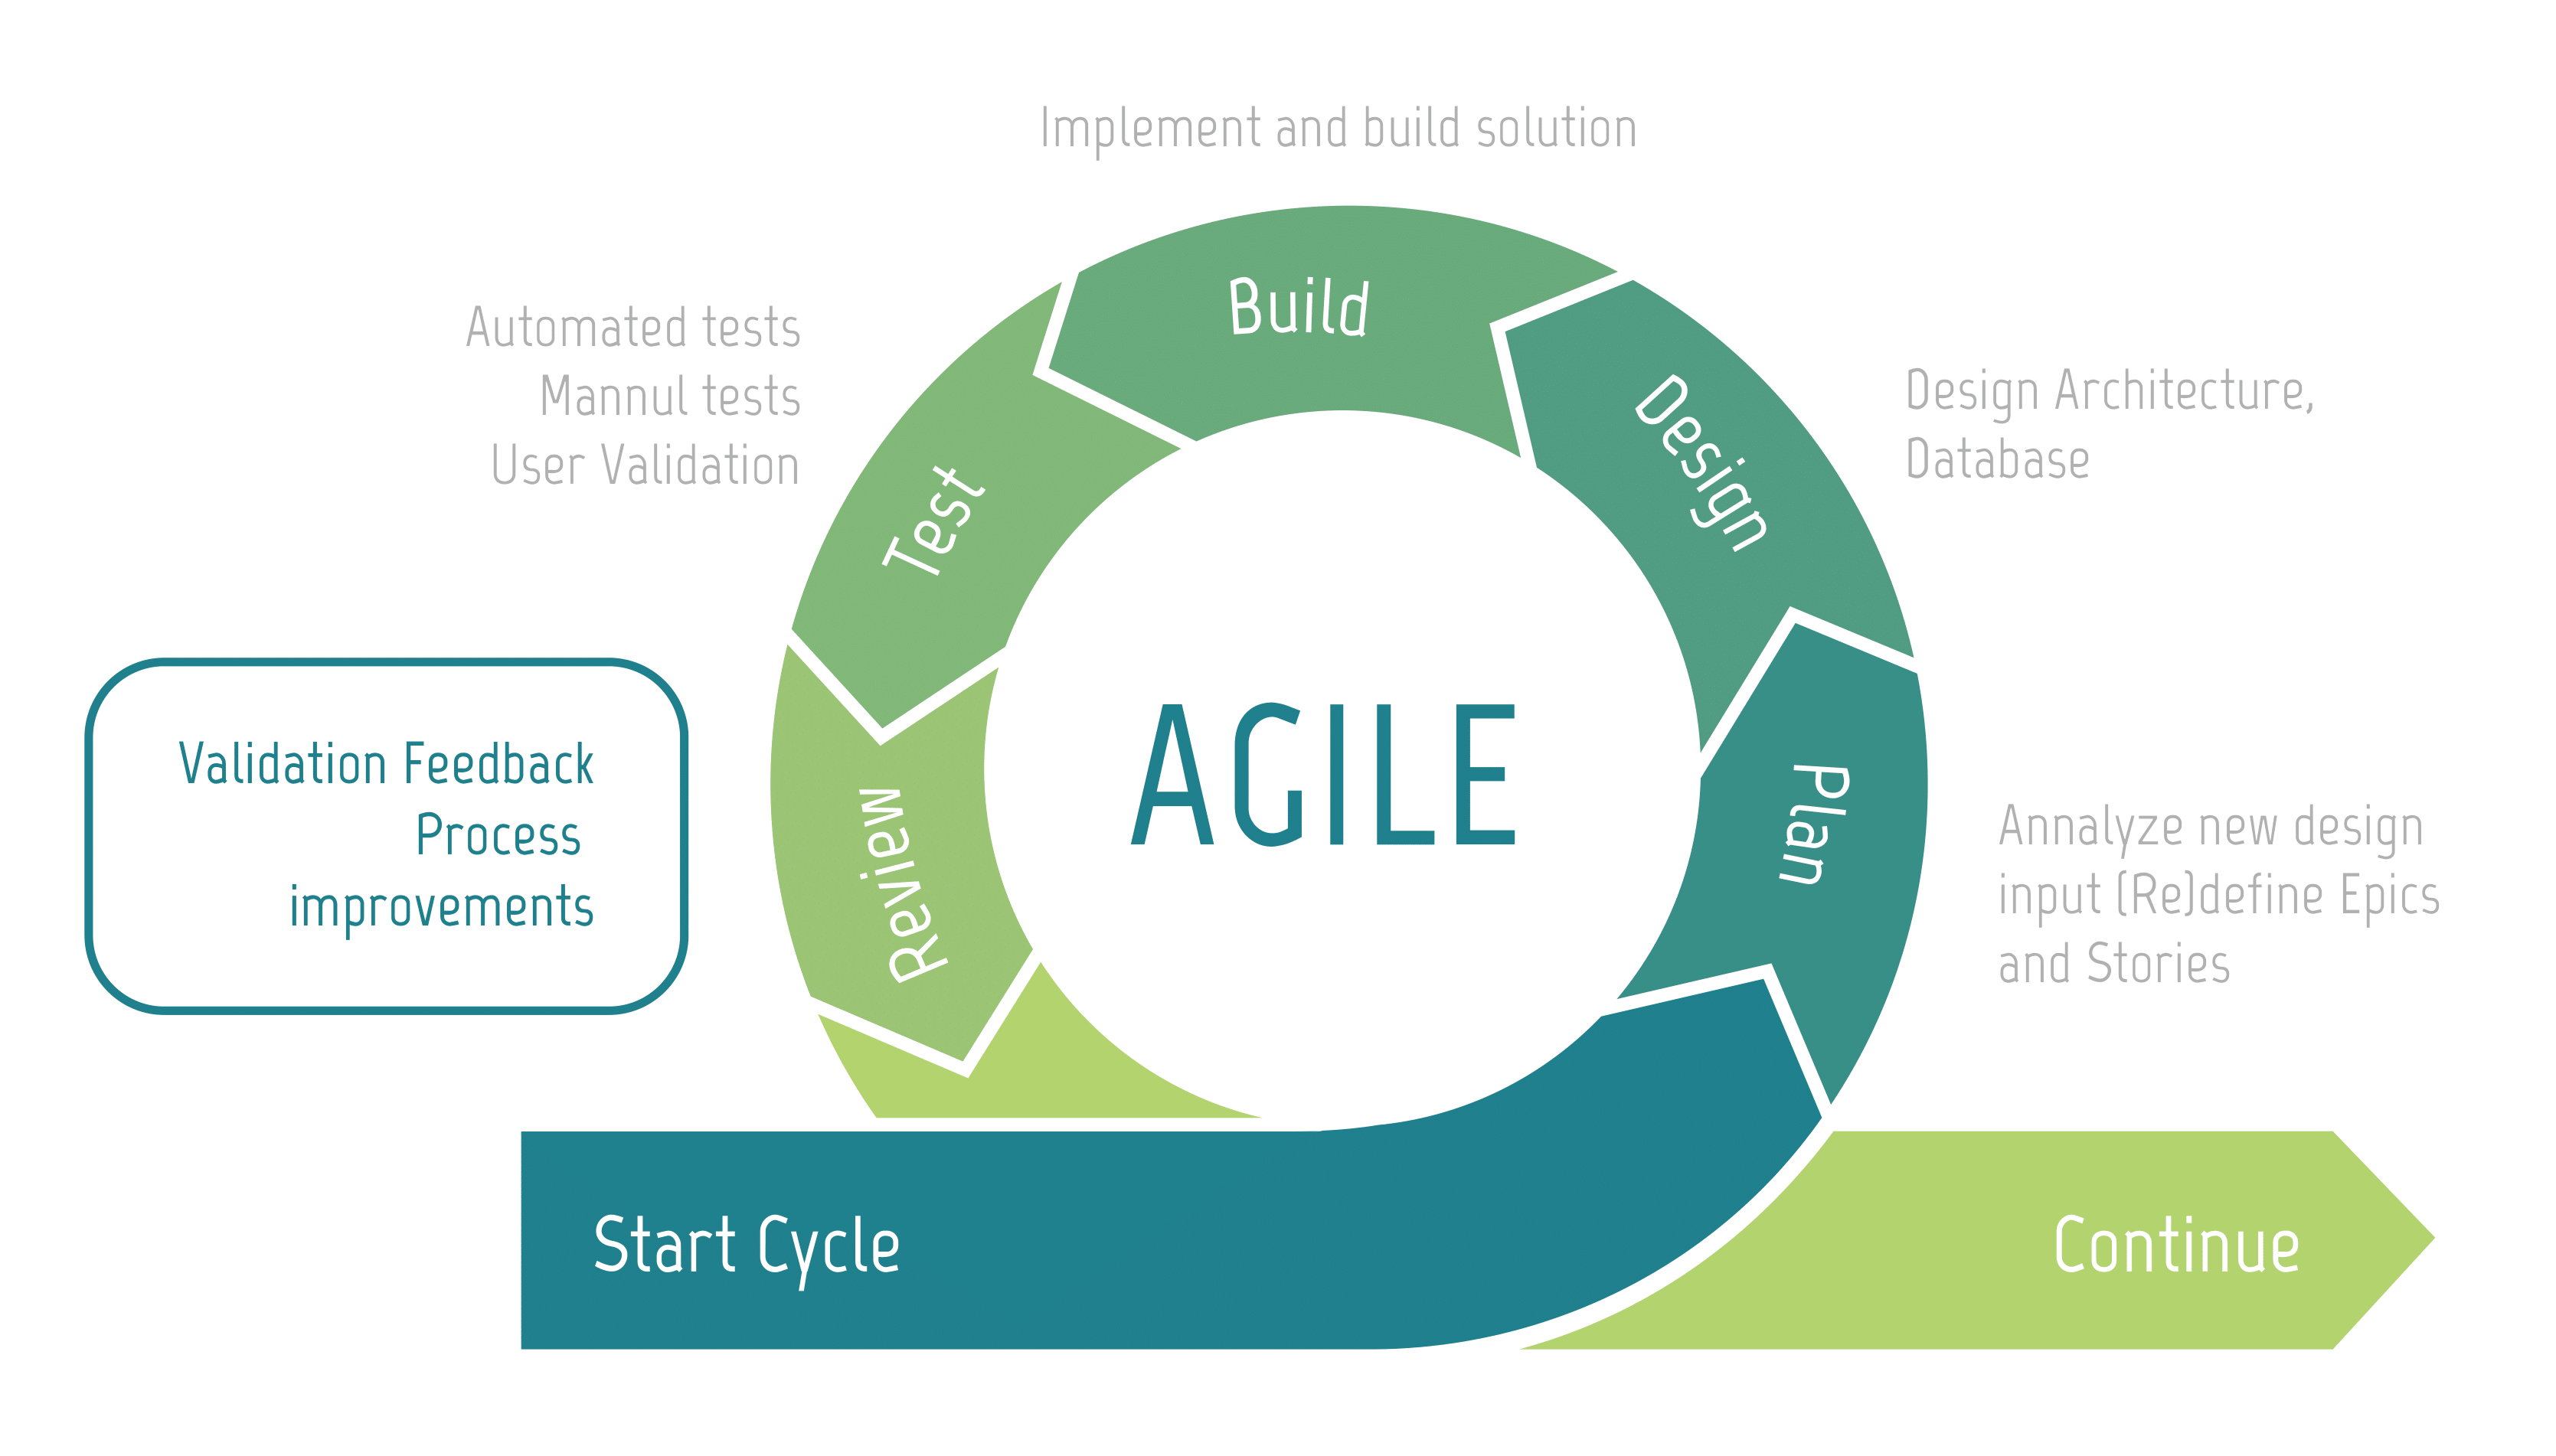 Agile process - Validation Feedback & Process Improvements